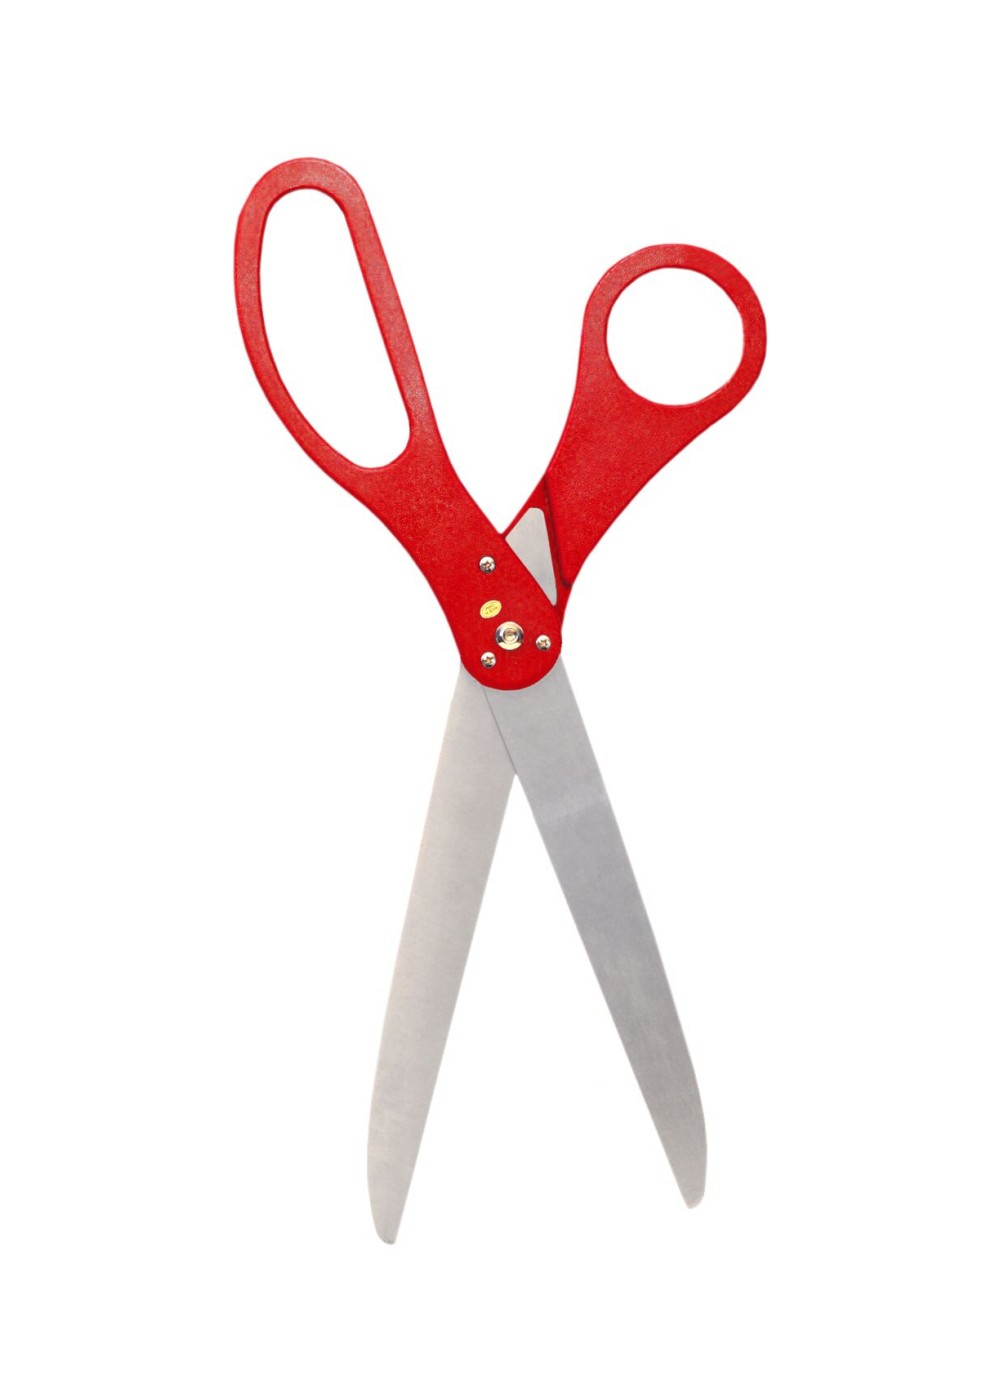 32 Inch Jumbo Scissors 